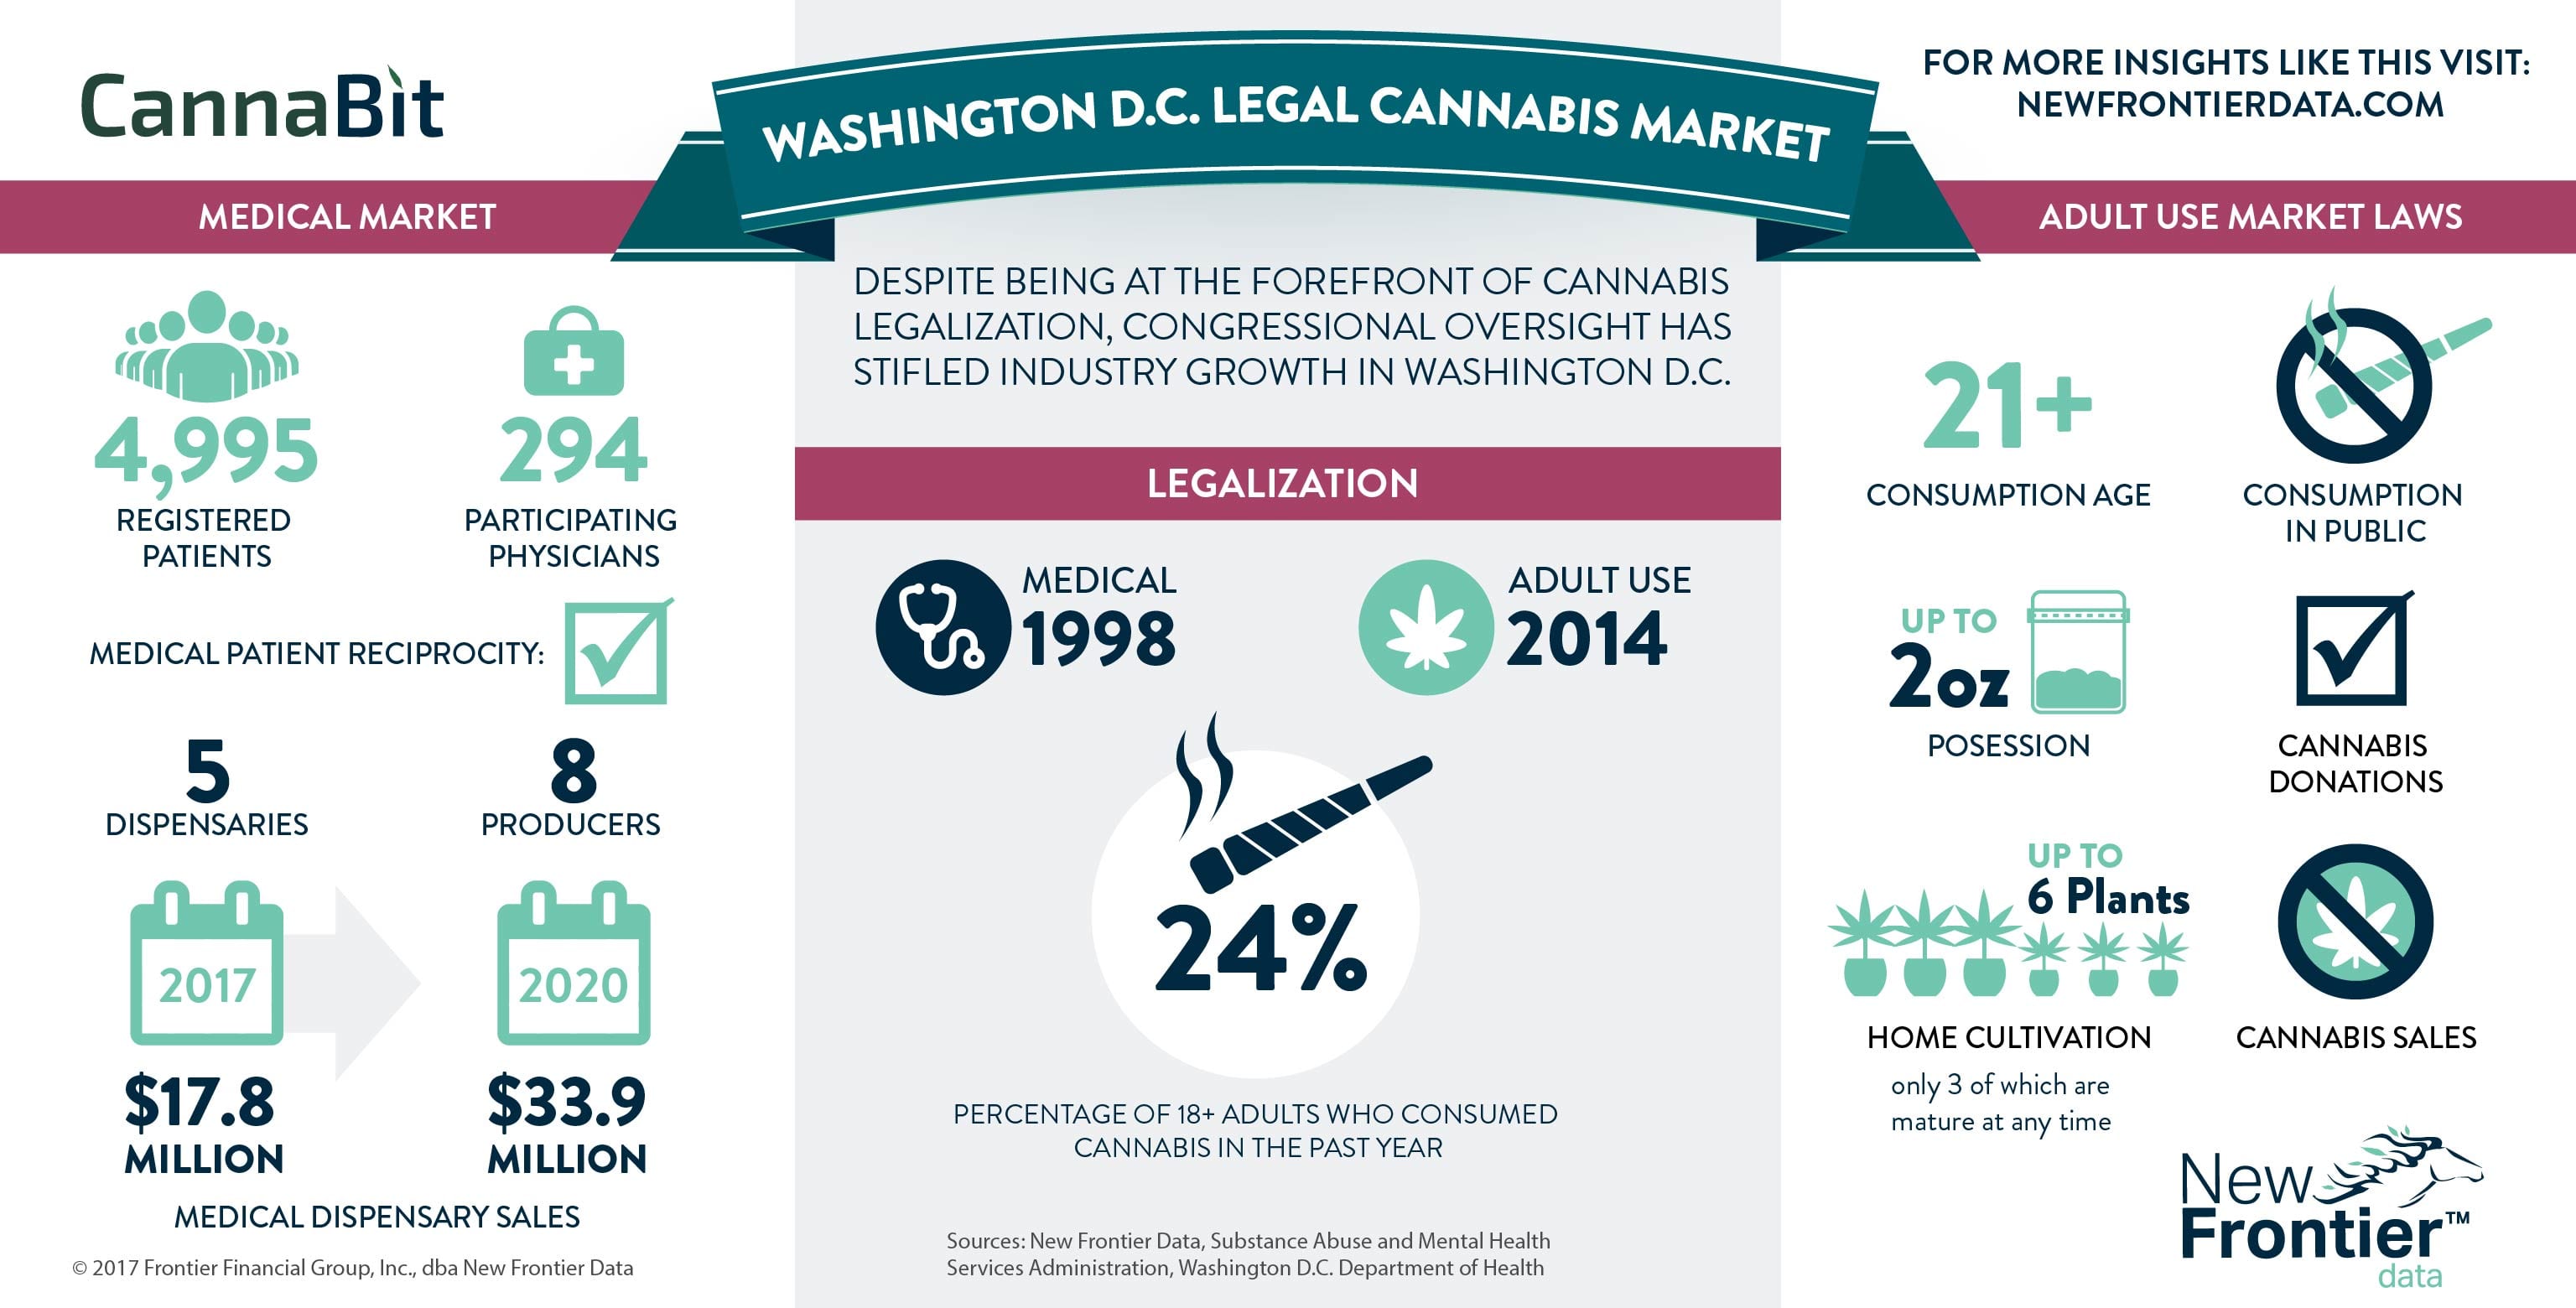 Cannabit: Washington D.C. Cannabis Market/ 05132017